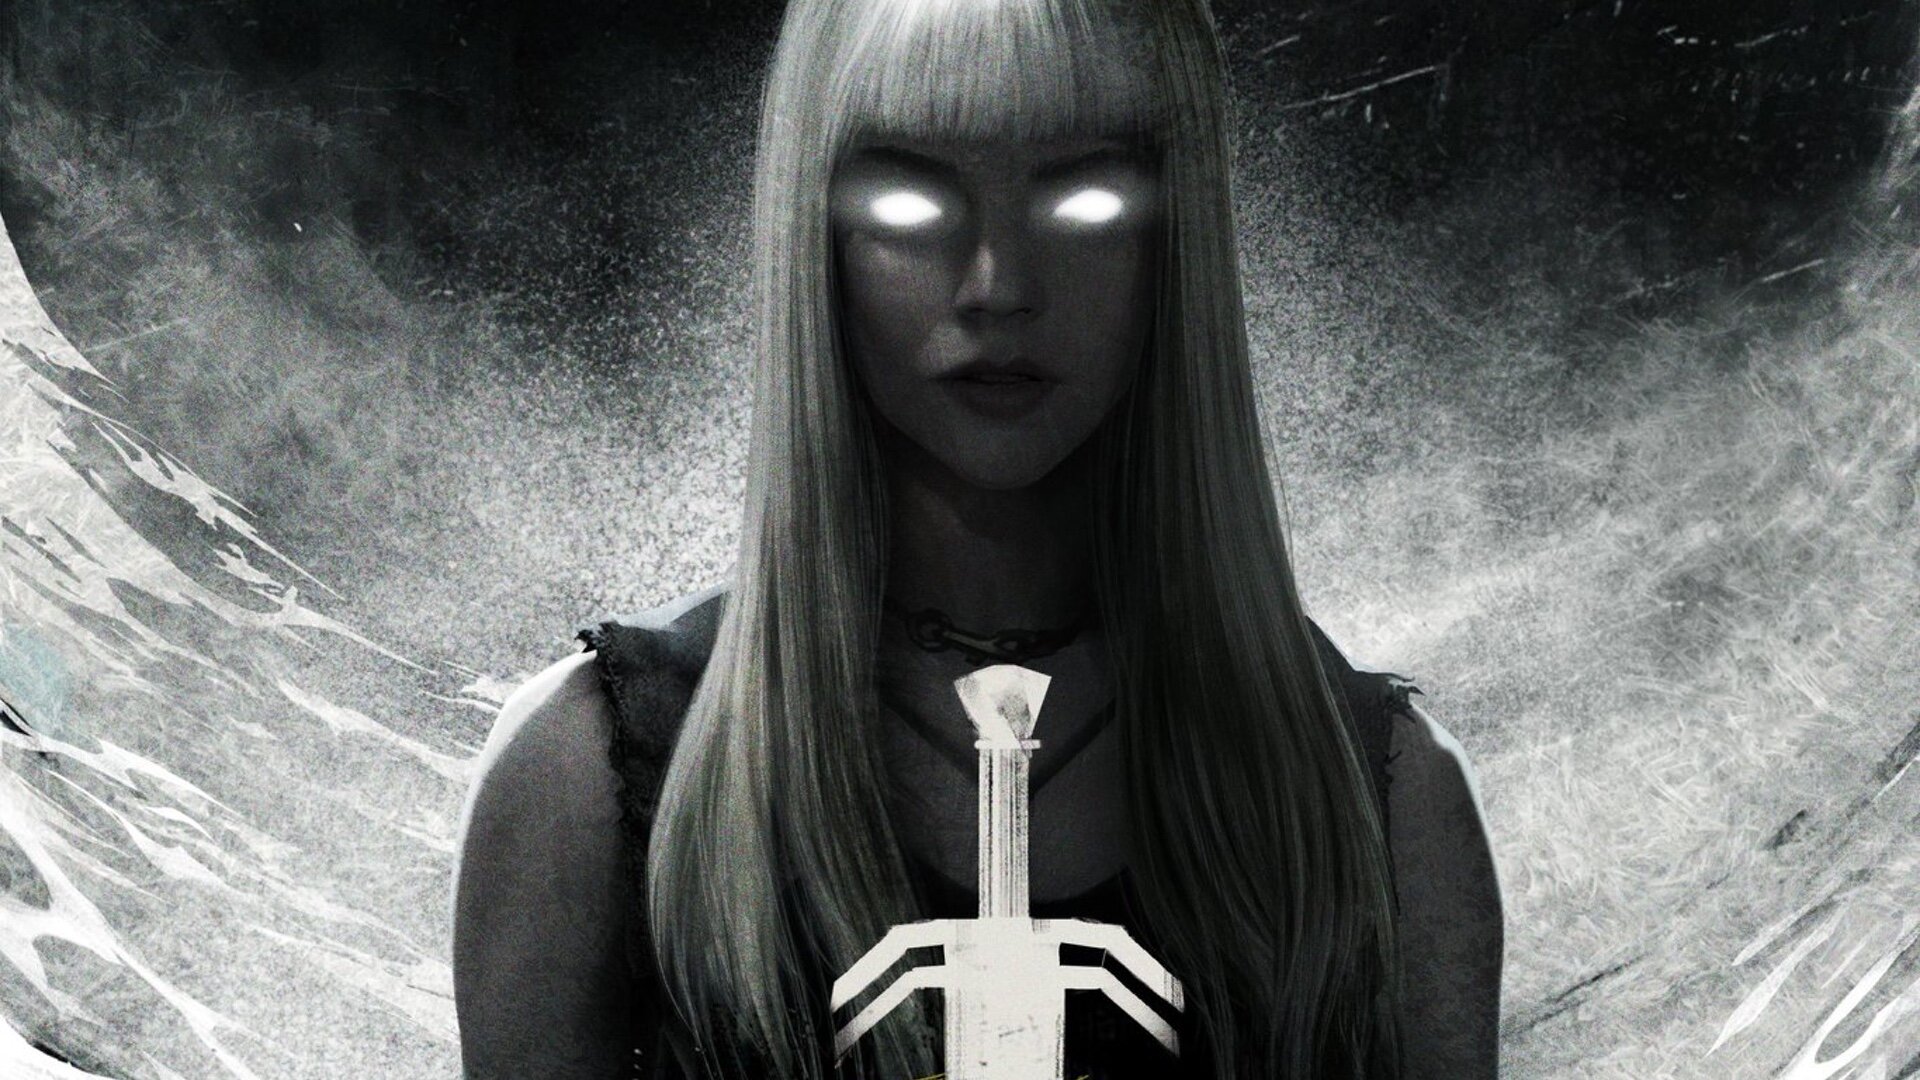 New Mutants Artist Teases Anya Taylor-Joy's Role as Magik in the